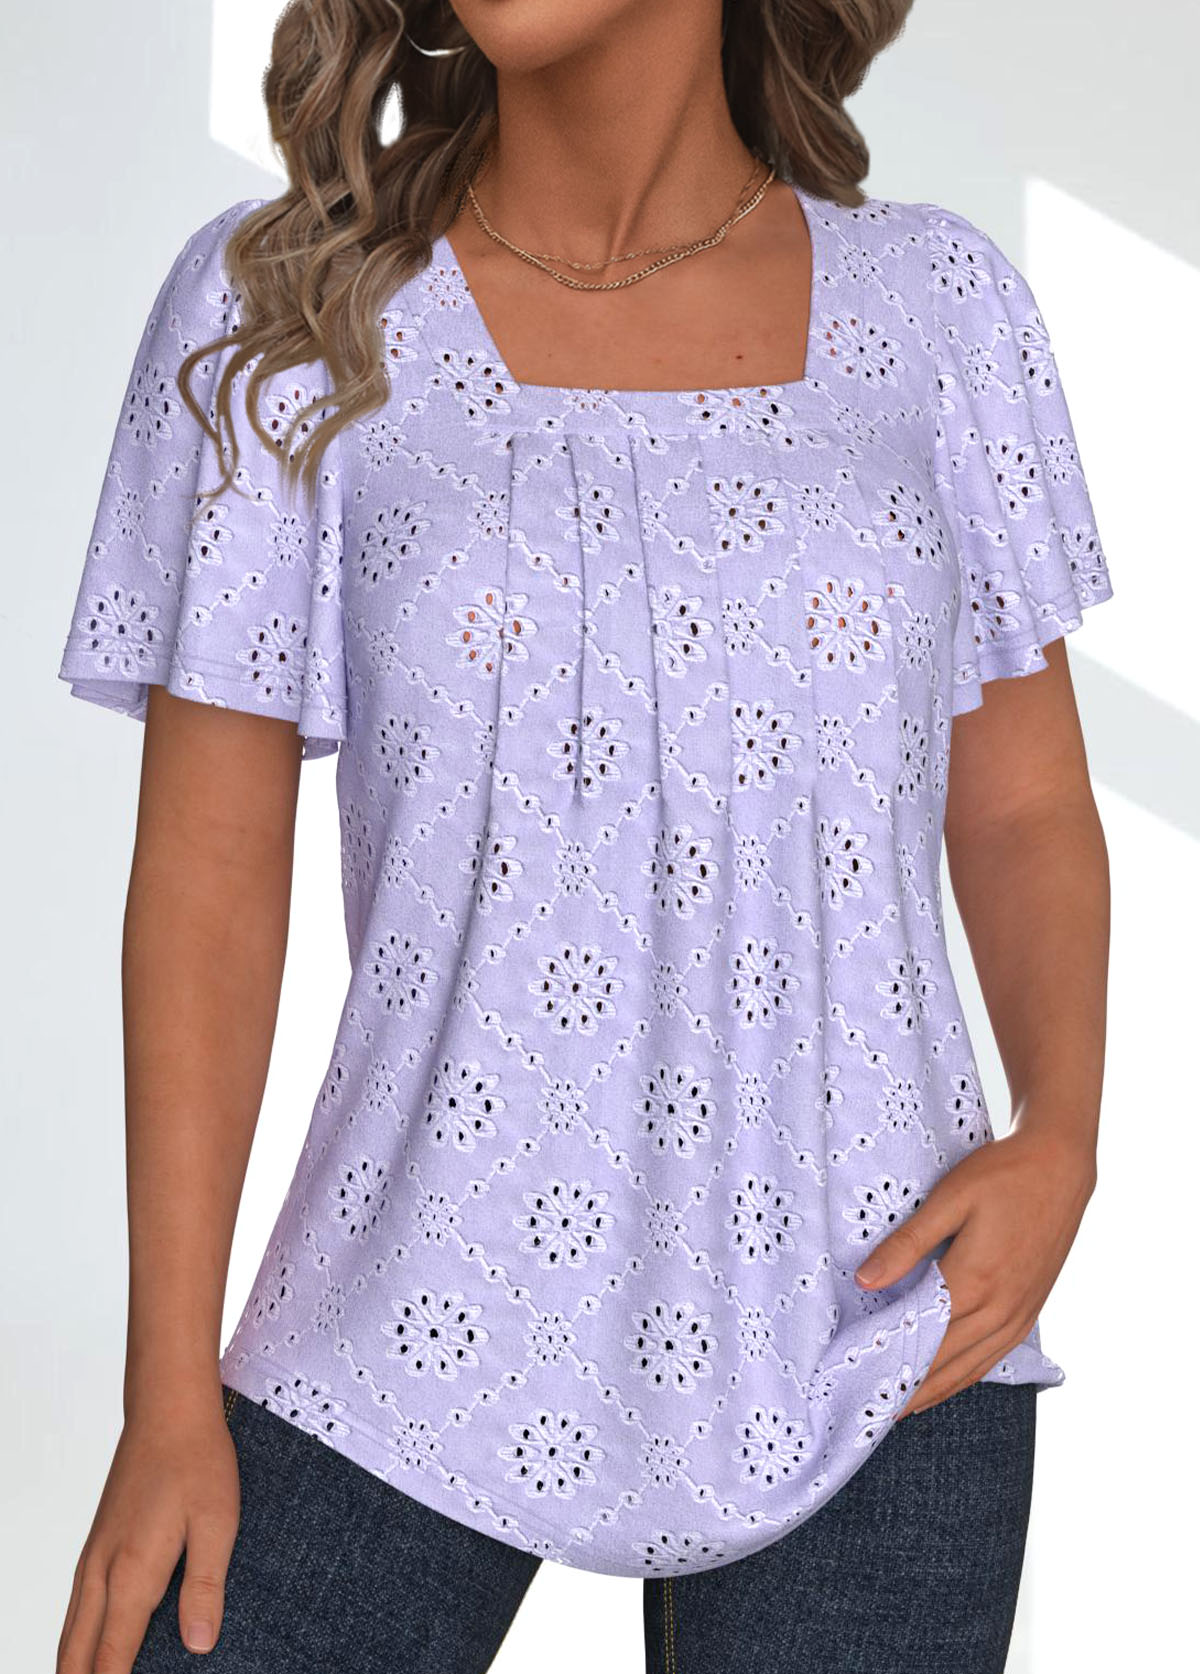 Textured Fabric Light Purple Short Sleeve T Shirt